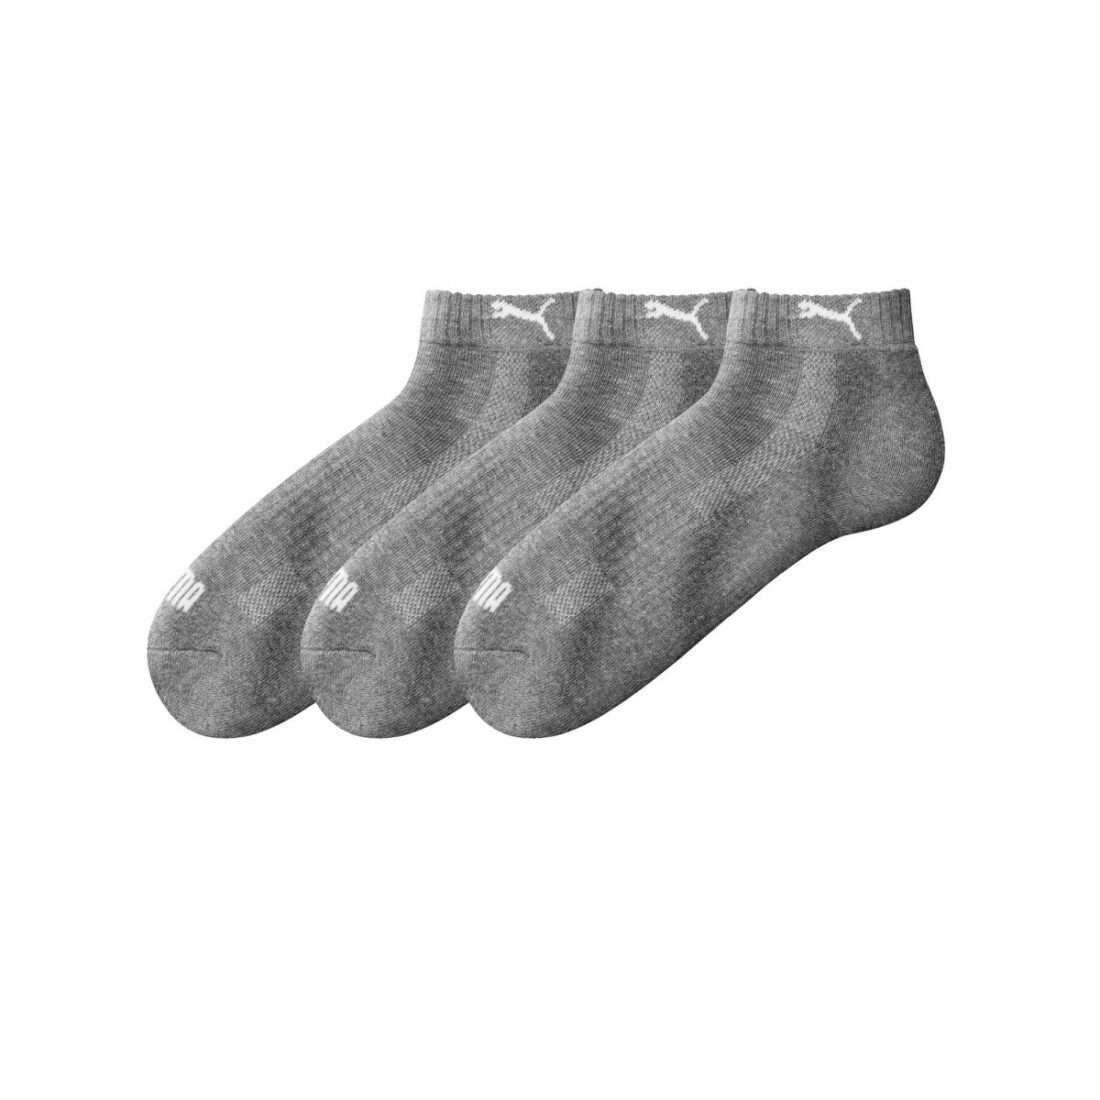 Sada 3 párů 3/4 nízkých ponožek